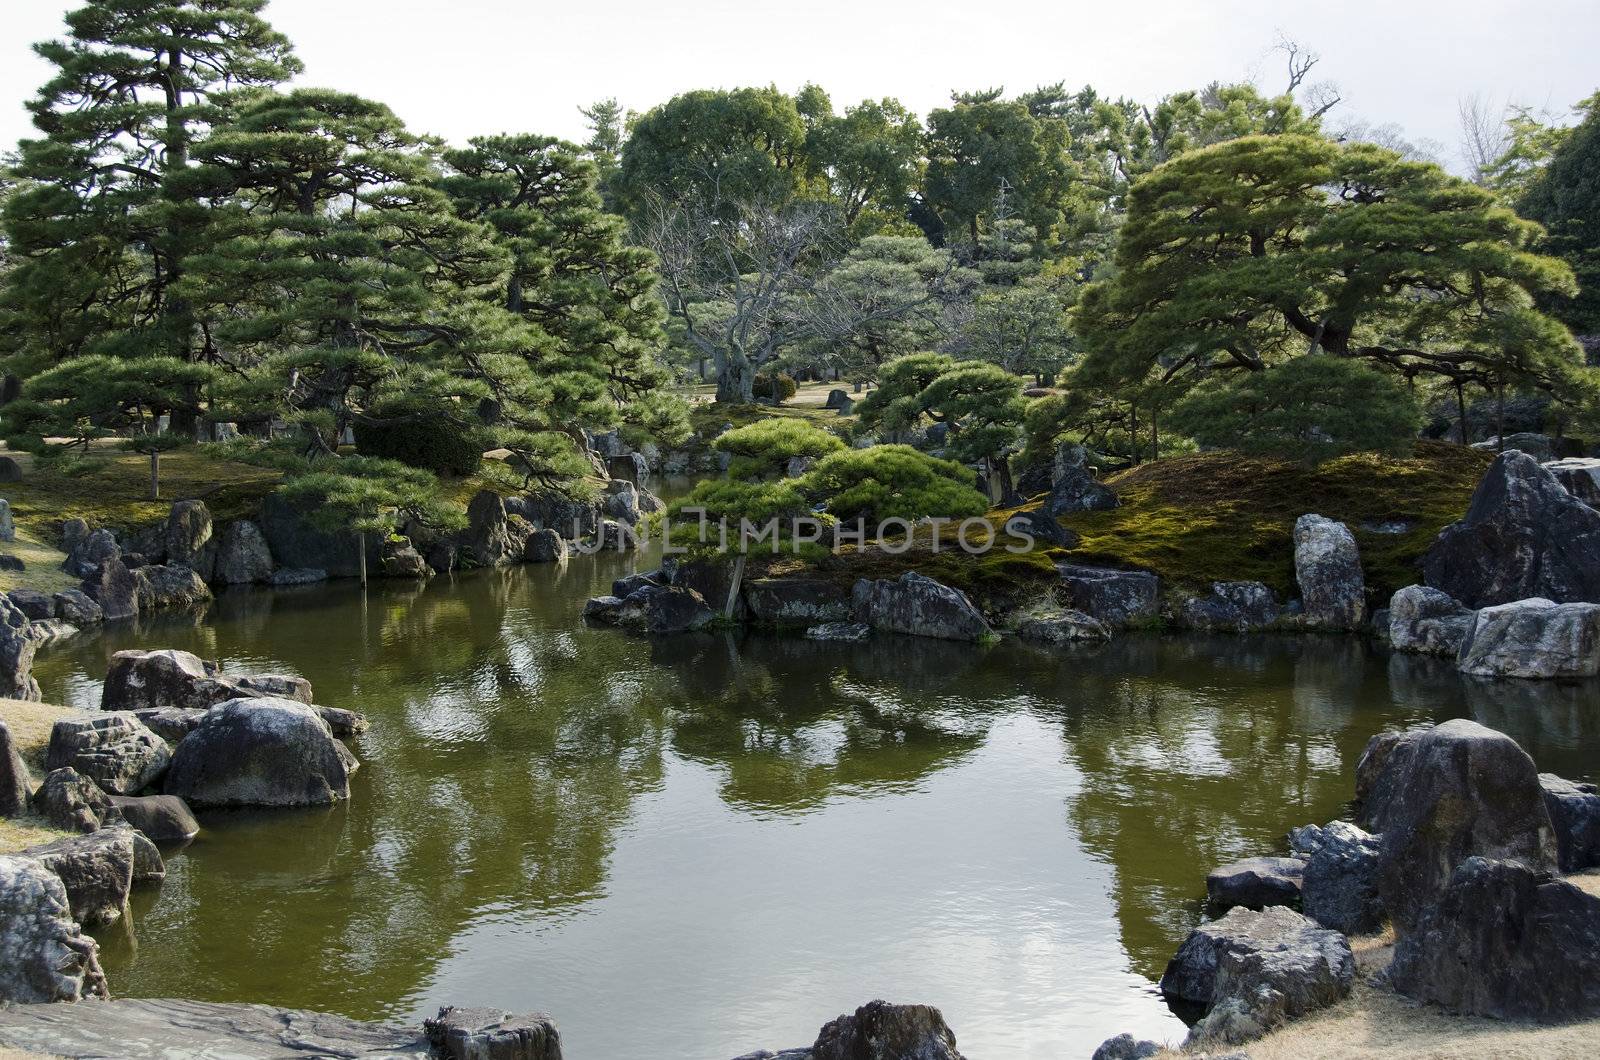 Japanese garden by Arrxxx